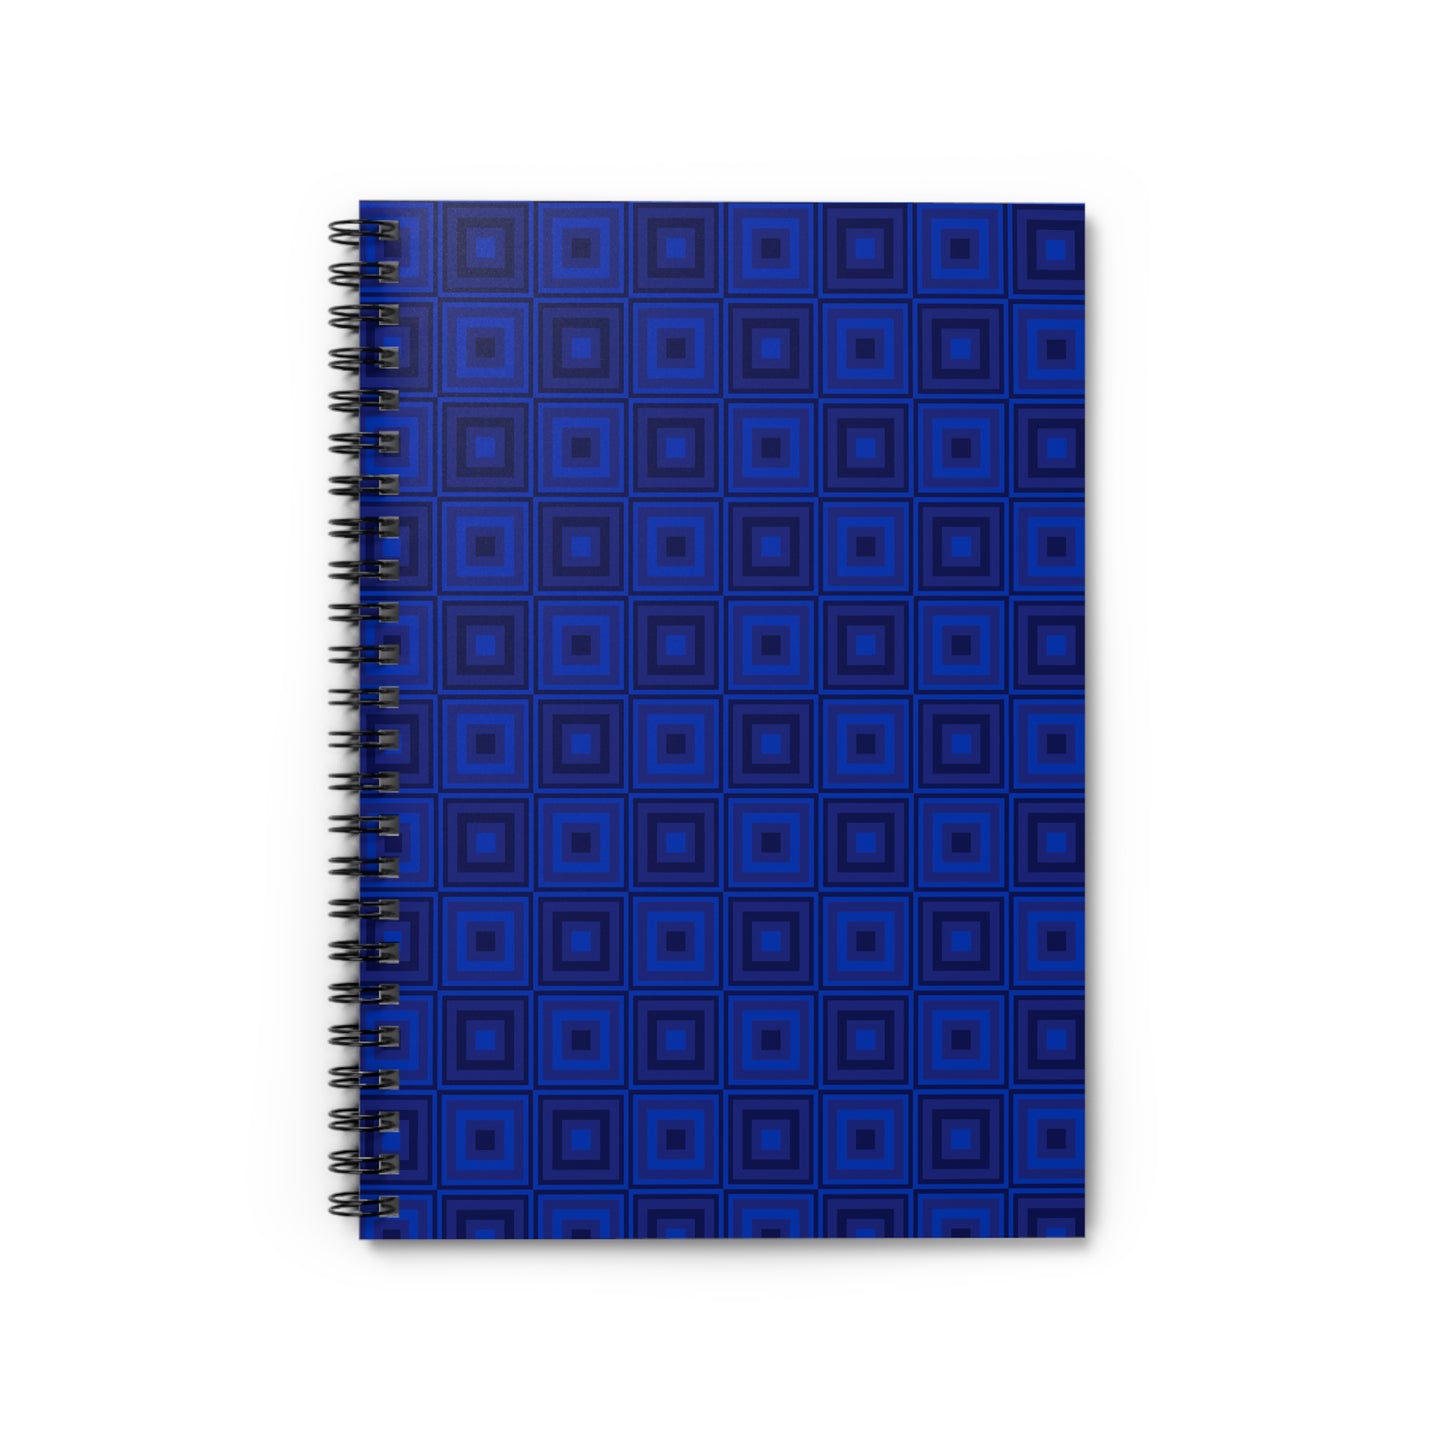 Blue Squares - Spiral Notebook - Ruled Line